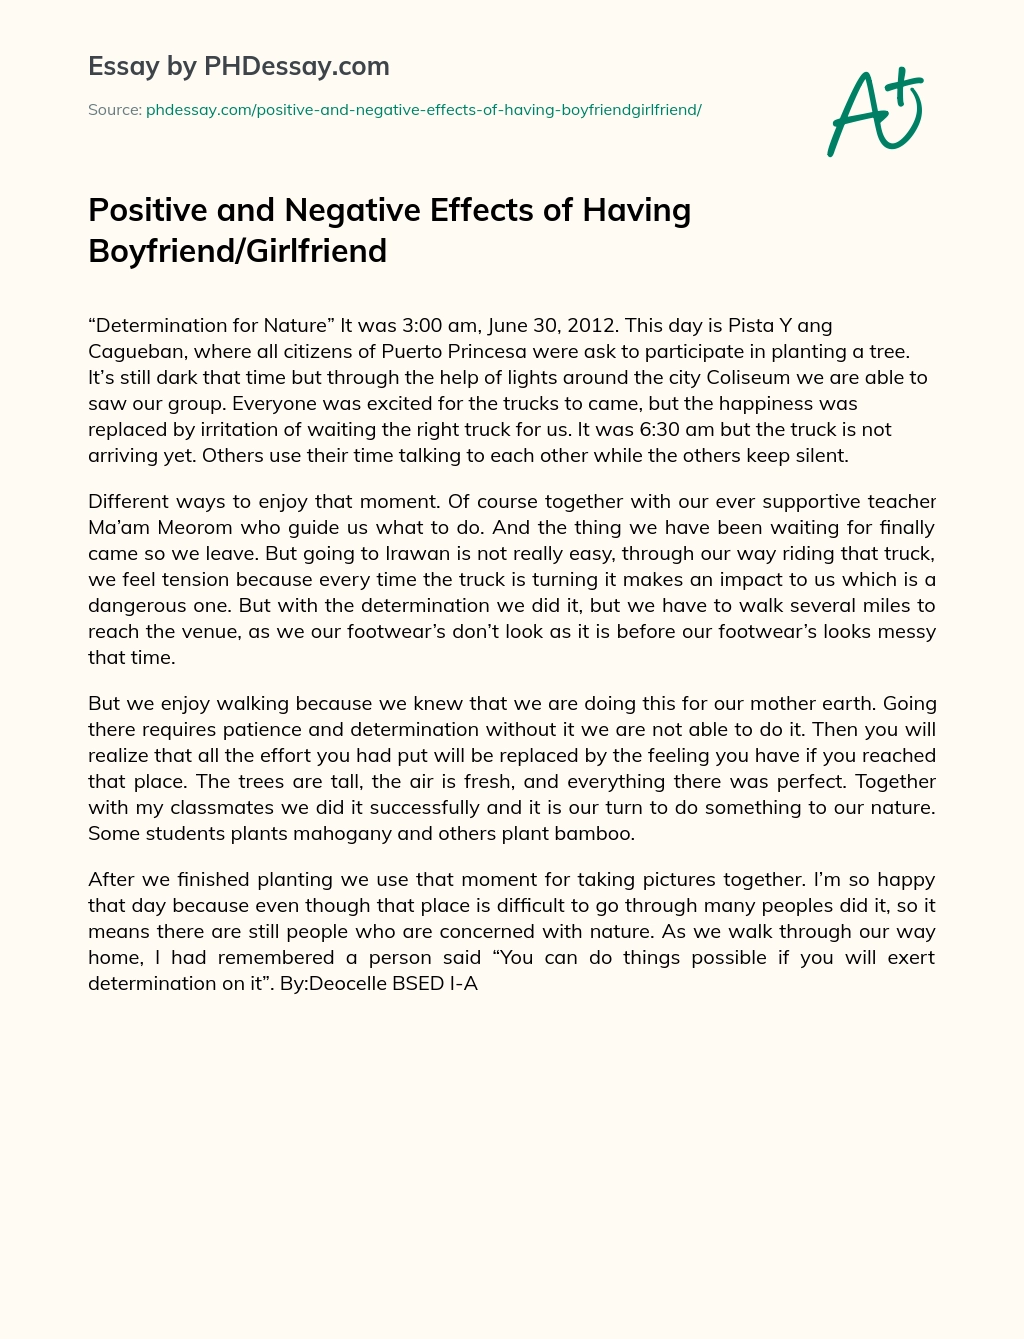 Positive and Negative Effects of Having Boyfriend/Girlfriend essay